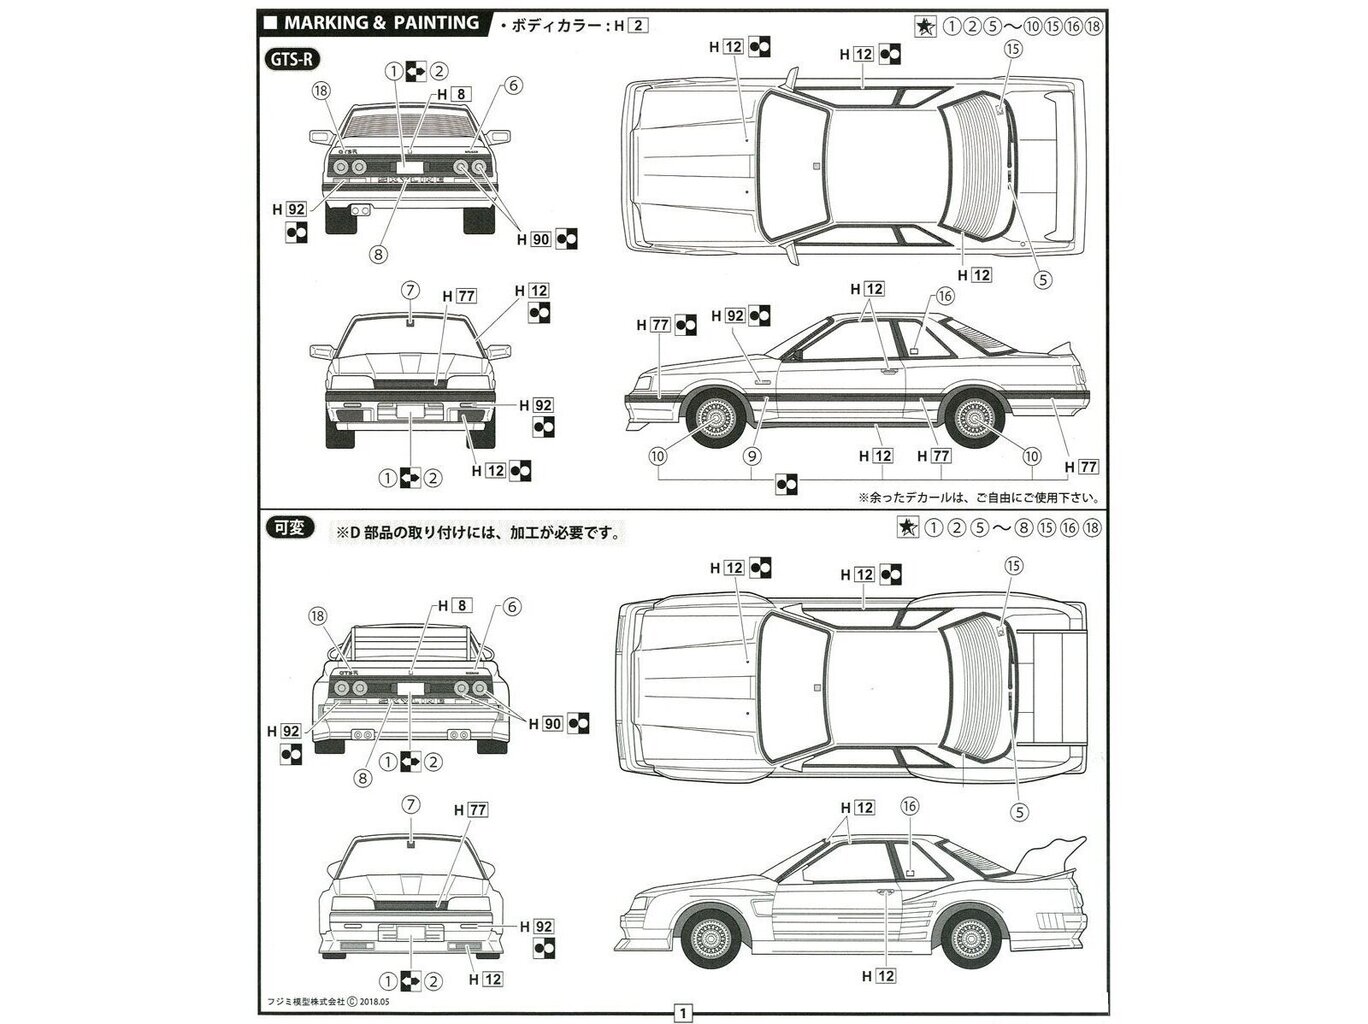 Fujimi - Skyline GTS-R (HR31) 1987 2 Door, 1/24, 03995 цена и информация | Konstruktori | 220.lv